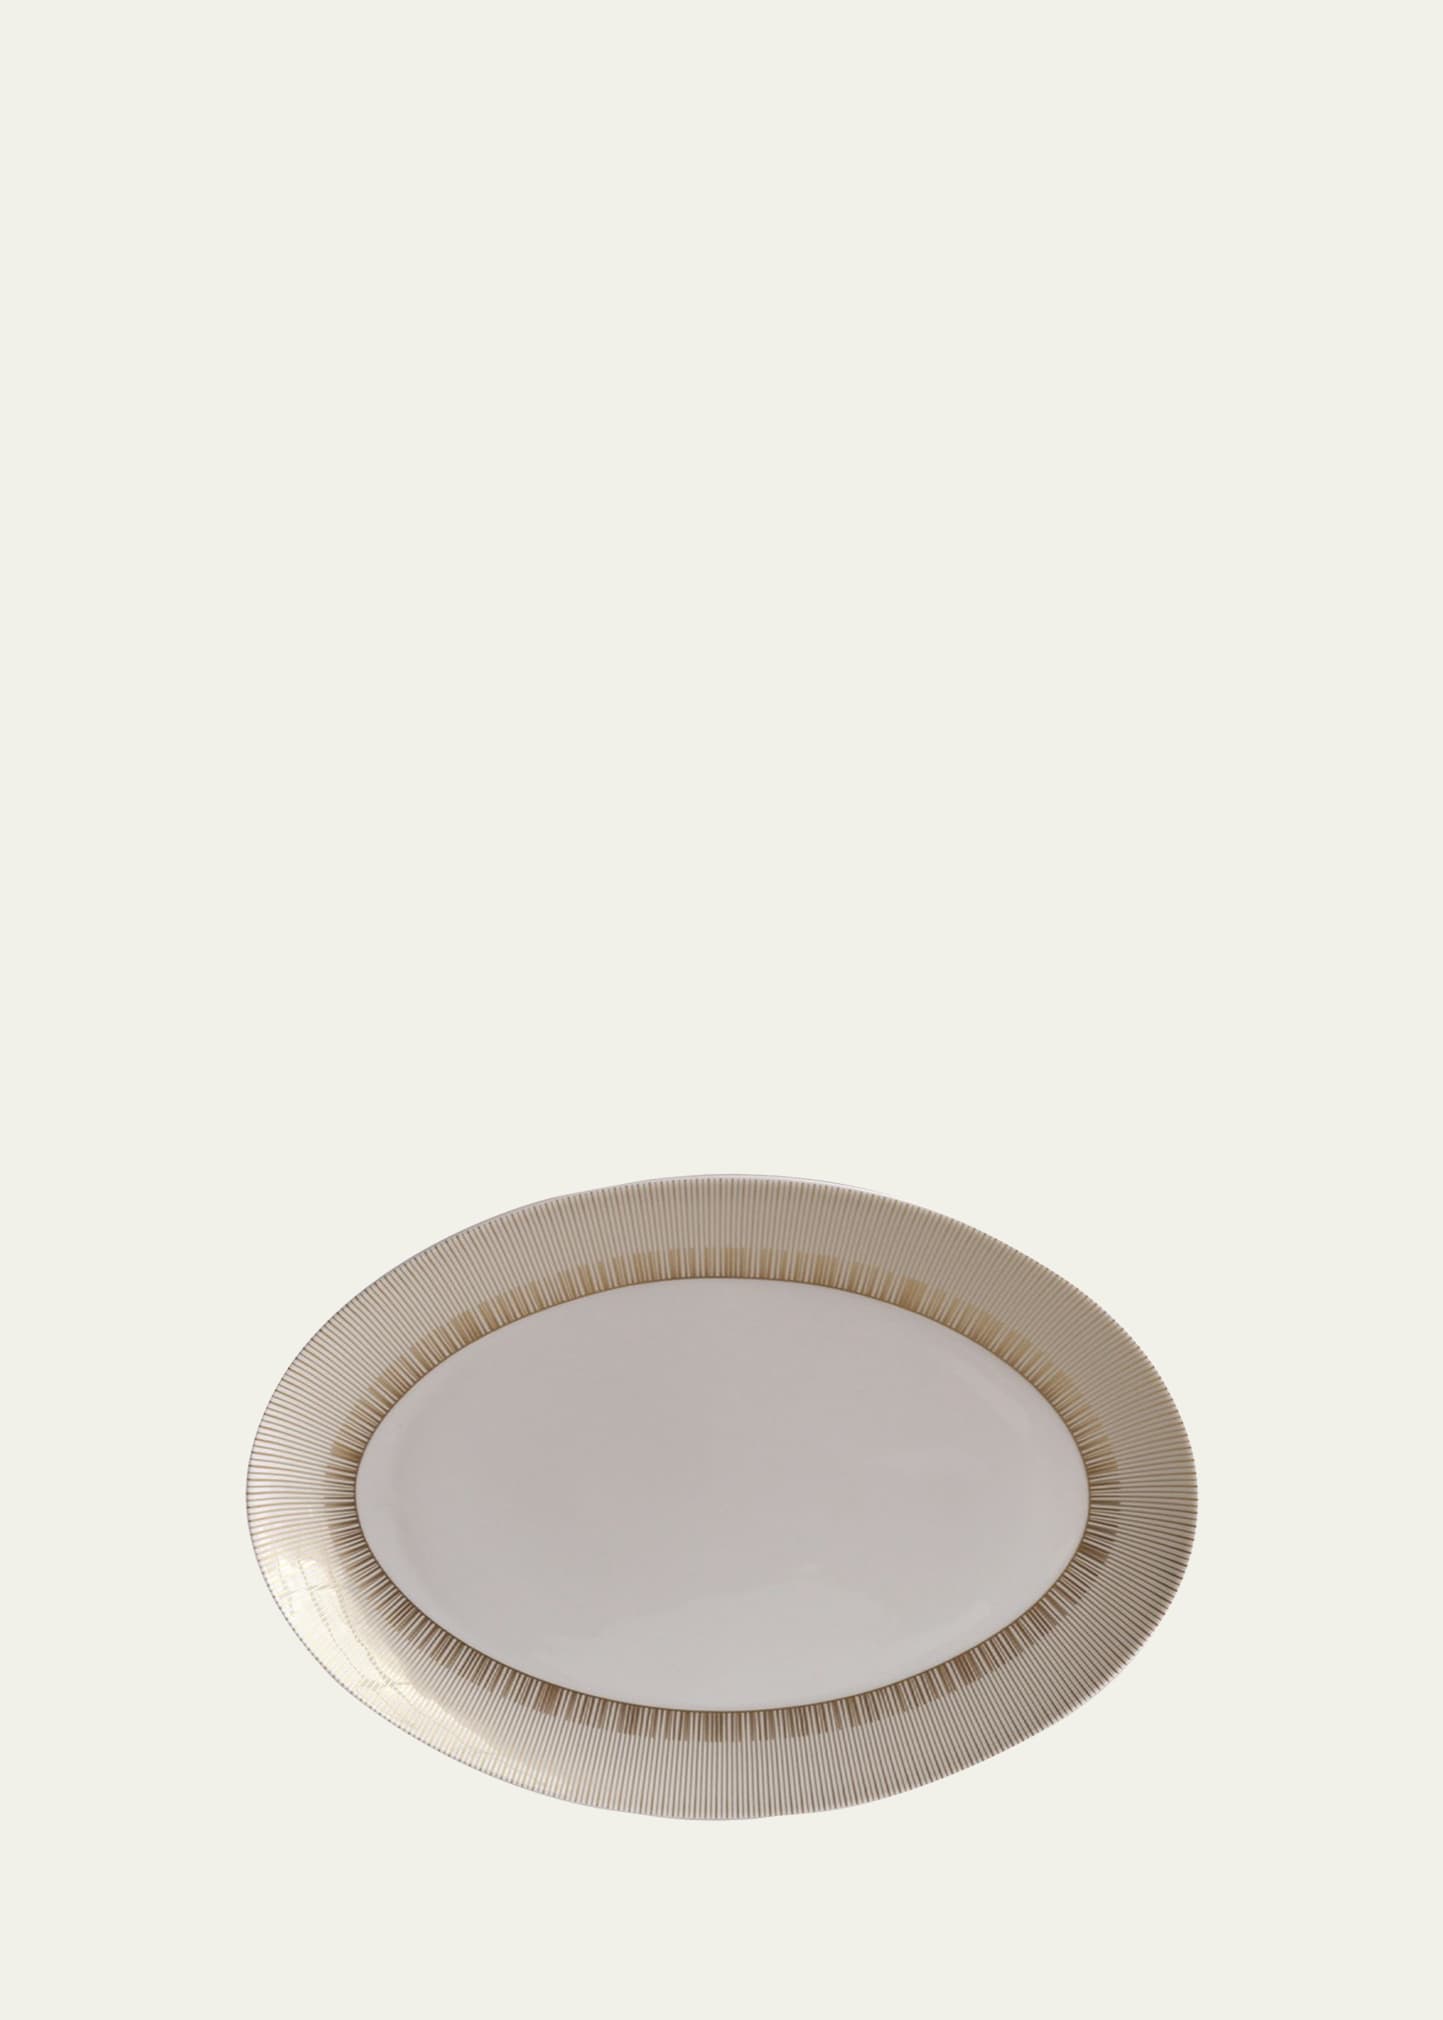 Sol Oval Platter, 15"